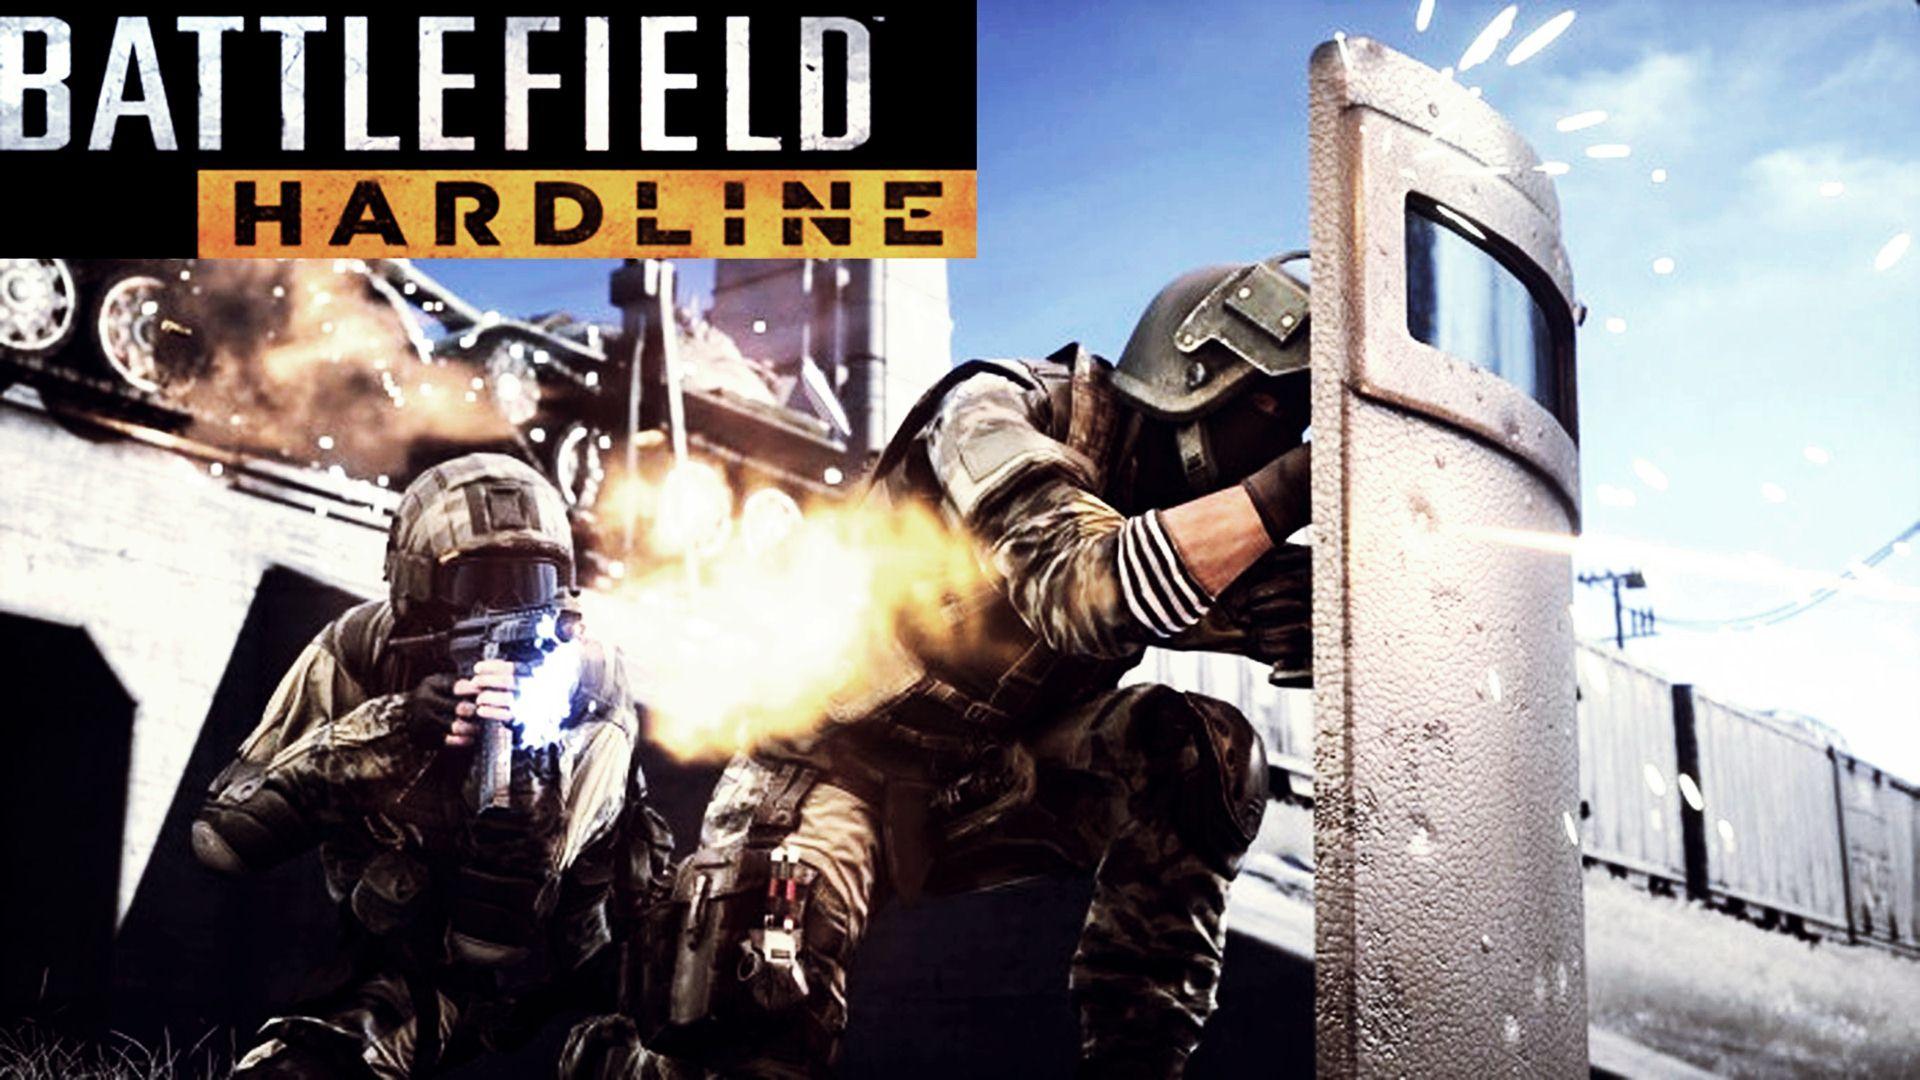 Battlefield Hardline wallpaper wallpaper free download 1920×1080